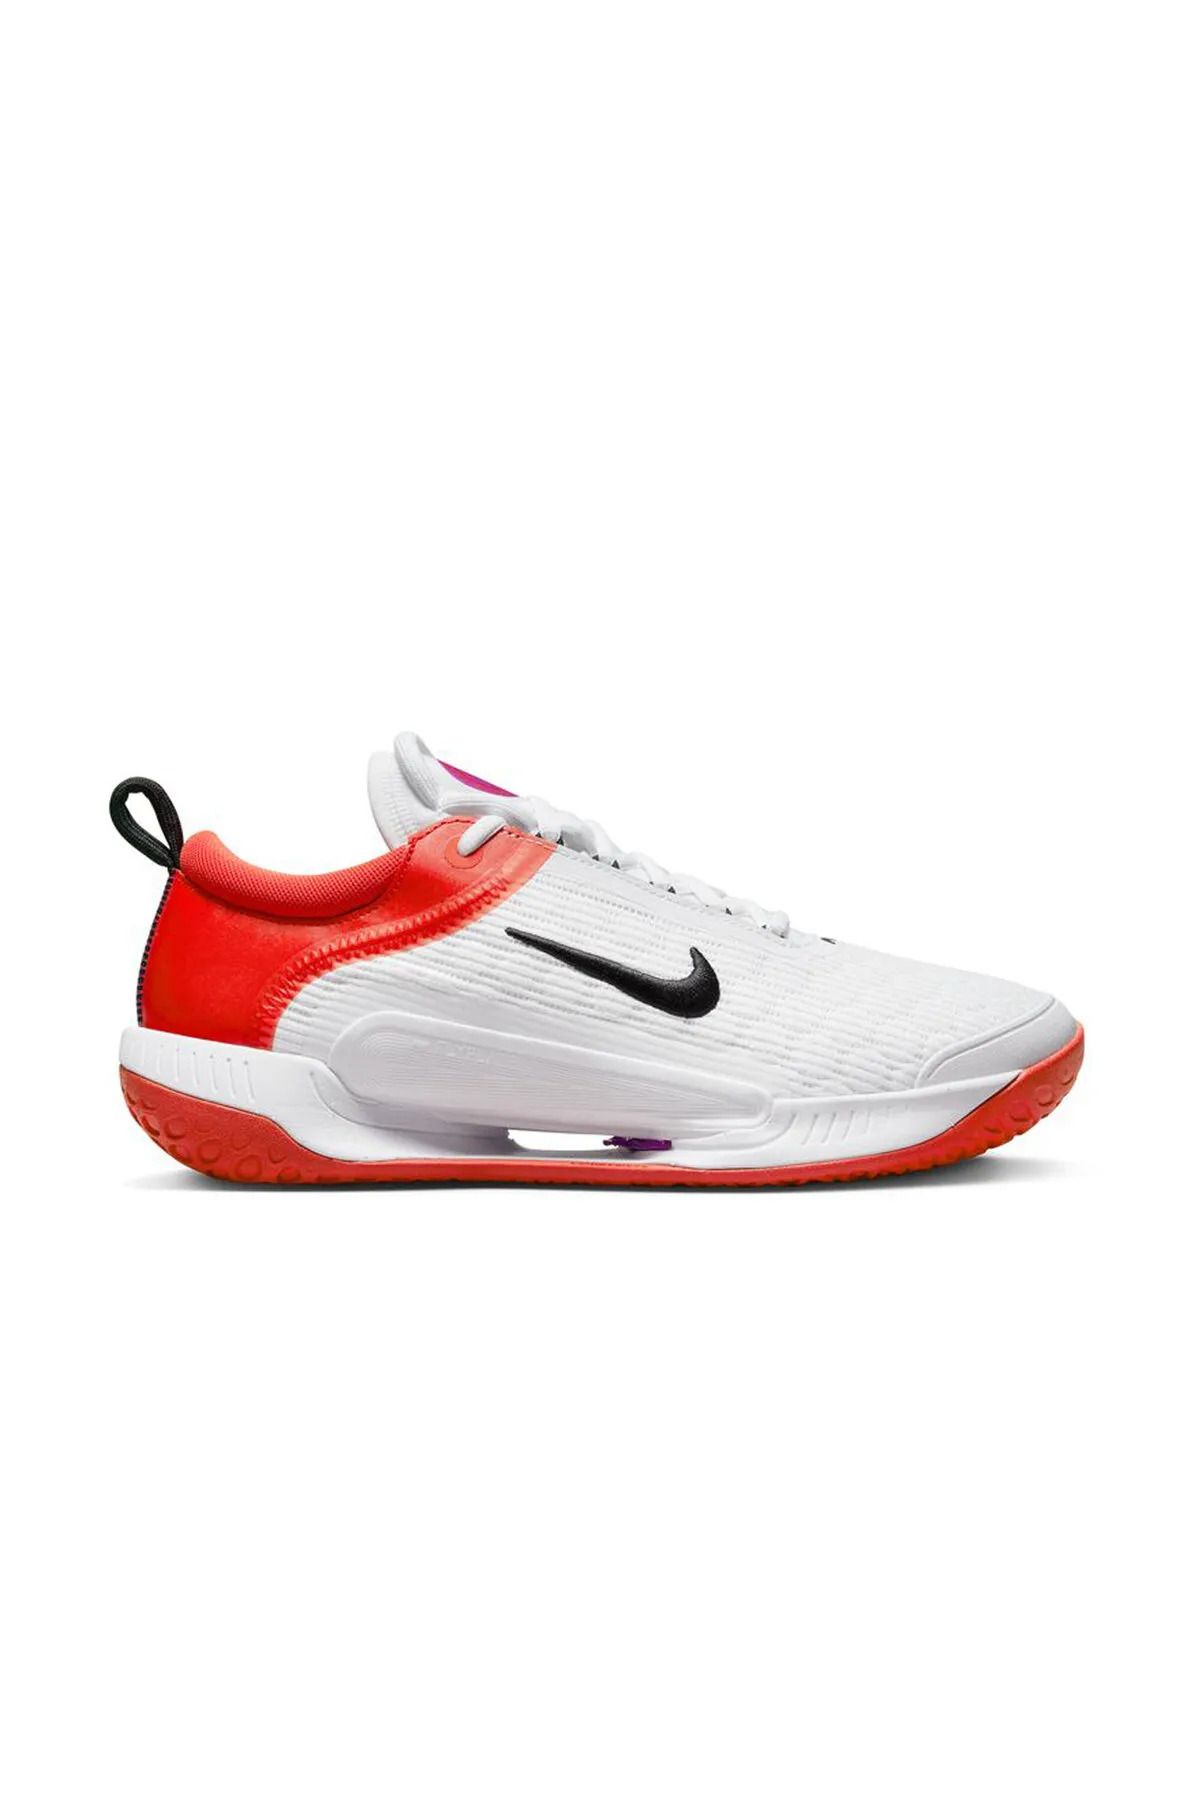 Nike Court Air Zoom NXT Sert Kort Unisex Tenis Ayakkabısı